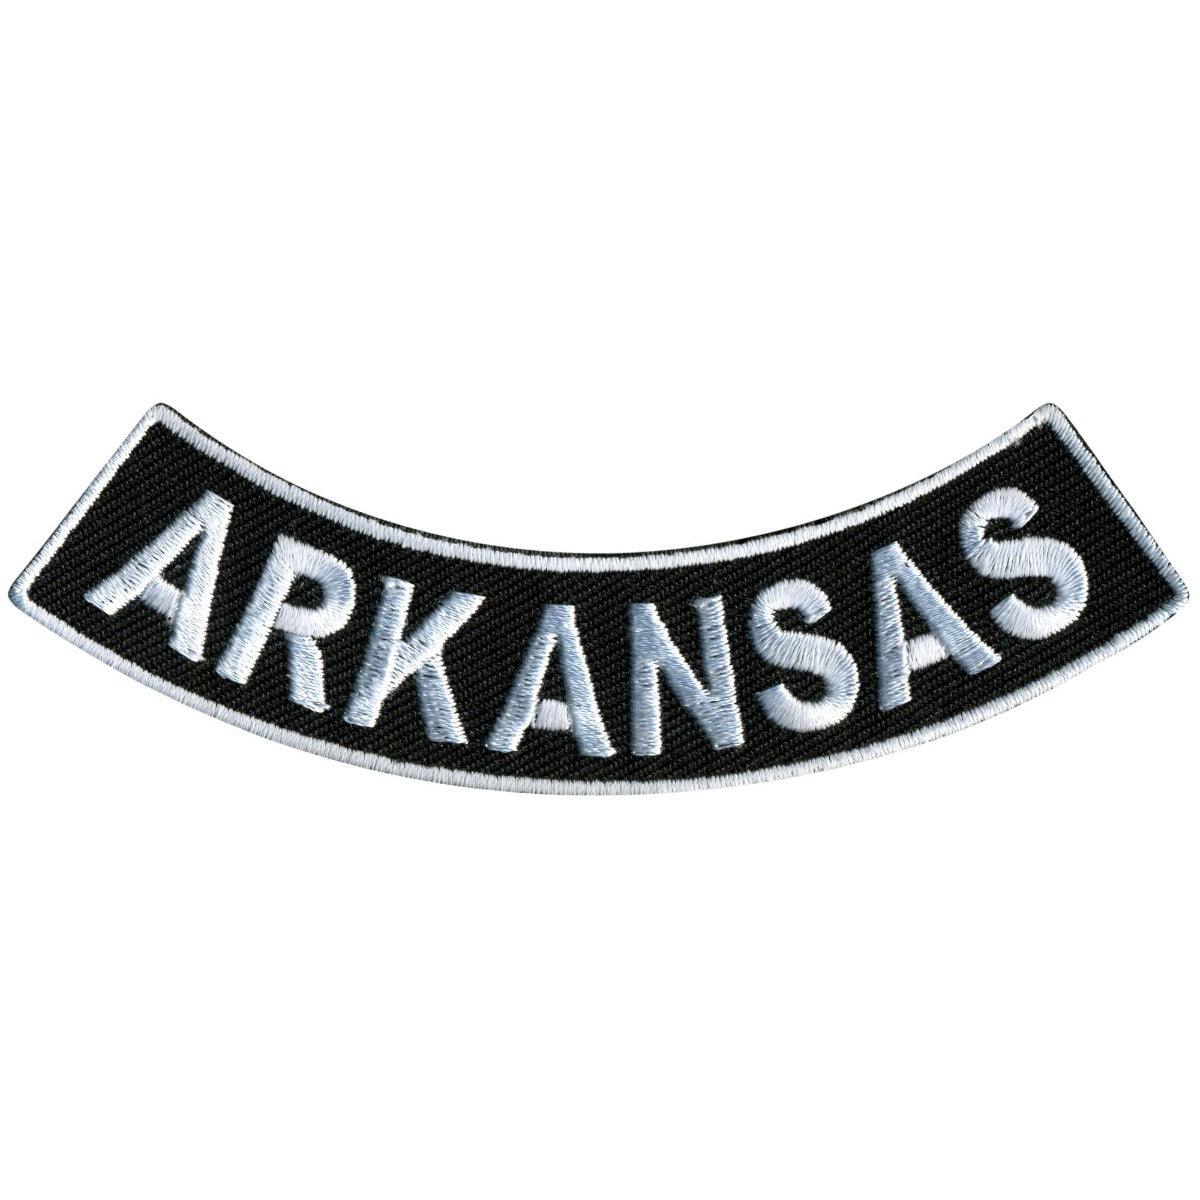 Hot Leathers Arkansas 4” X 1” Bottom Rocker Patch - American Legend Rider